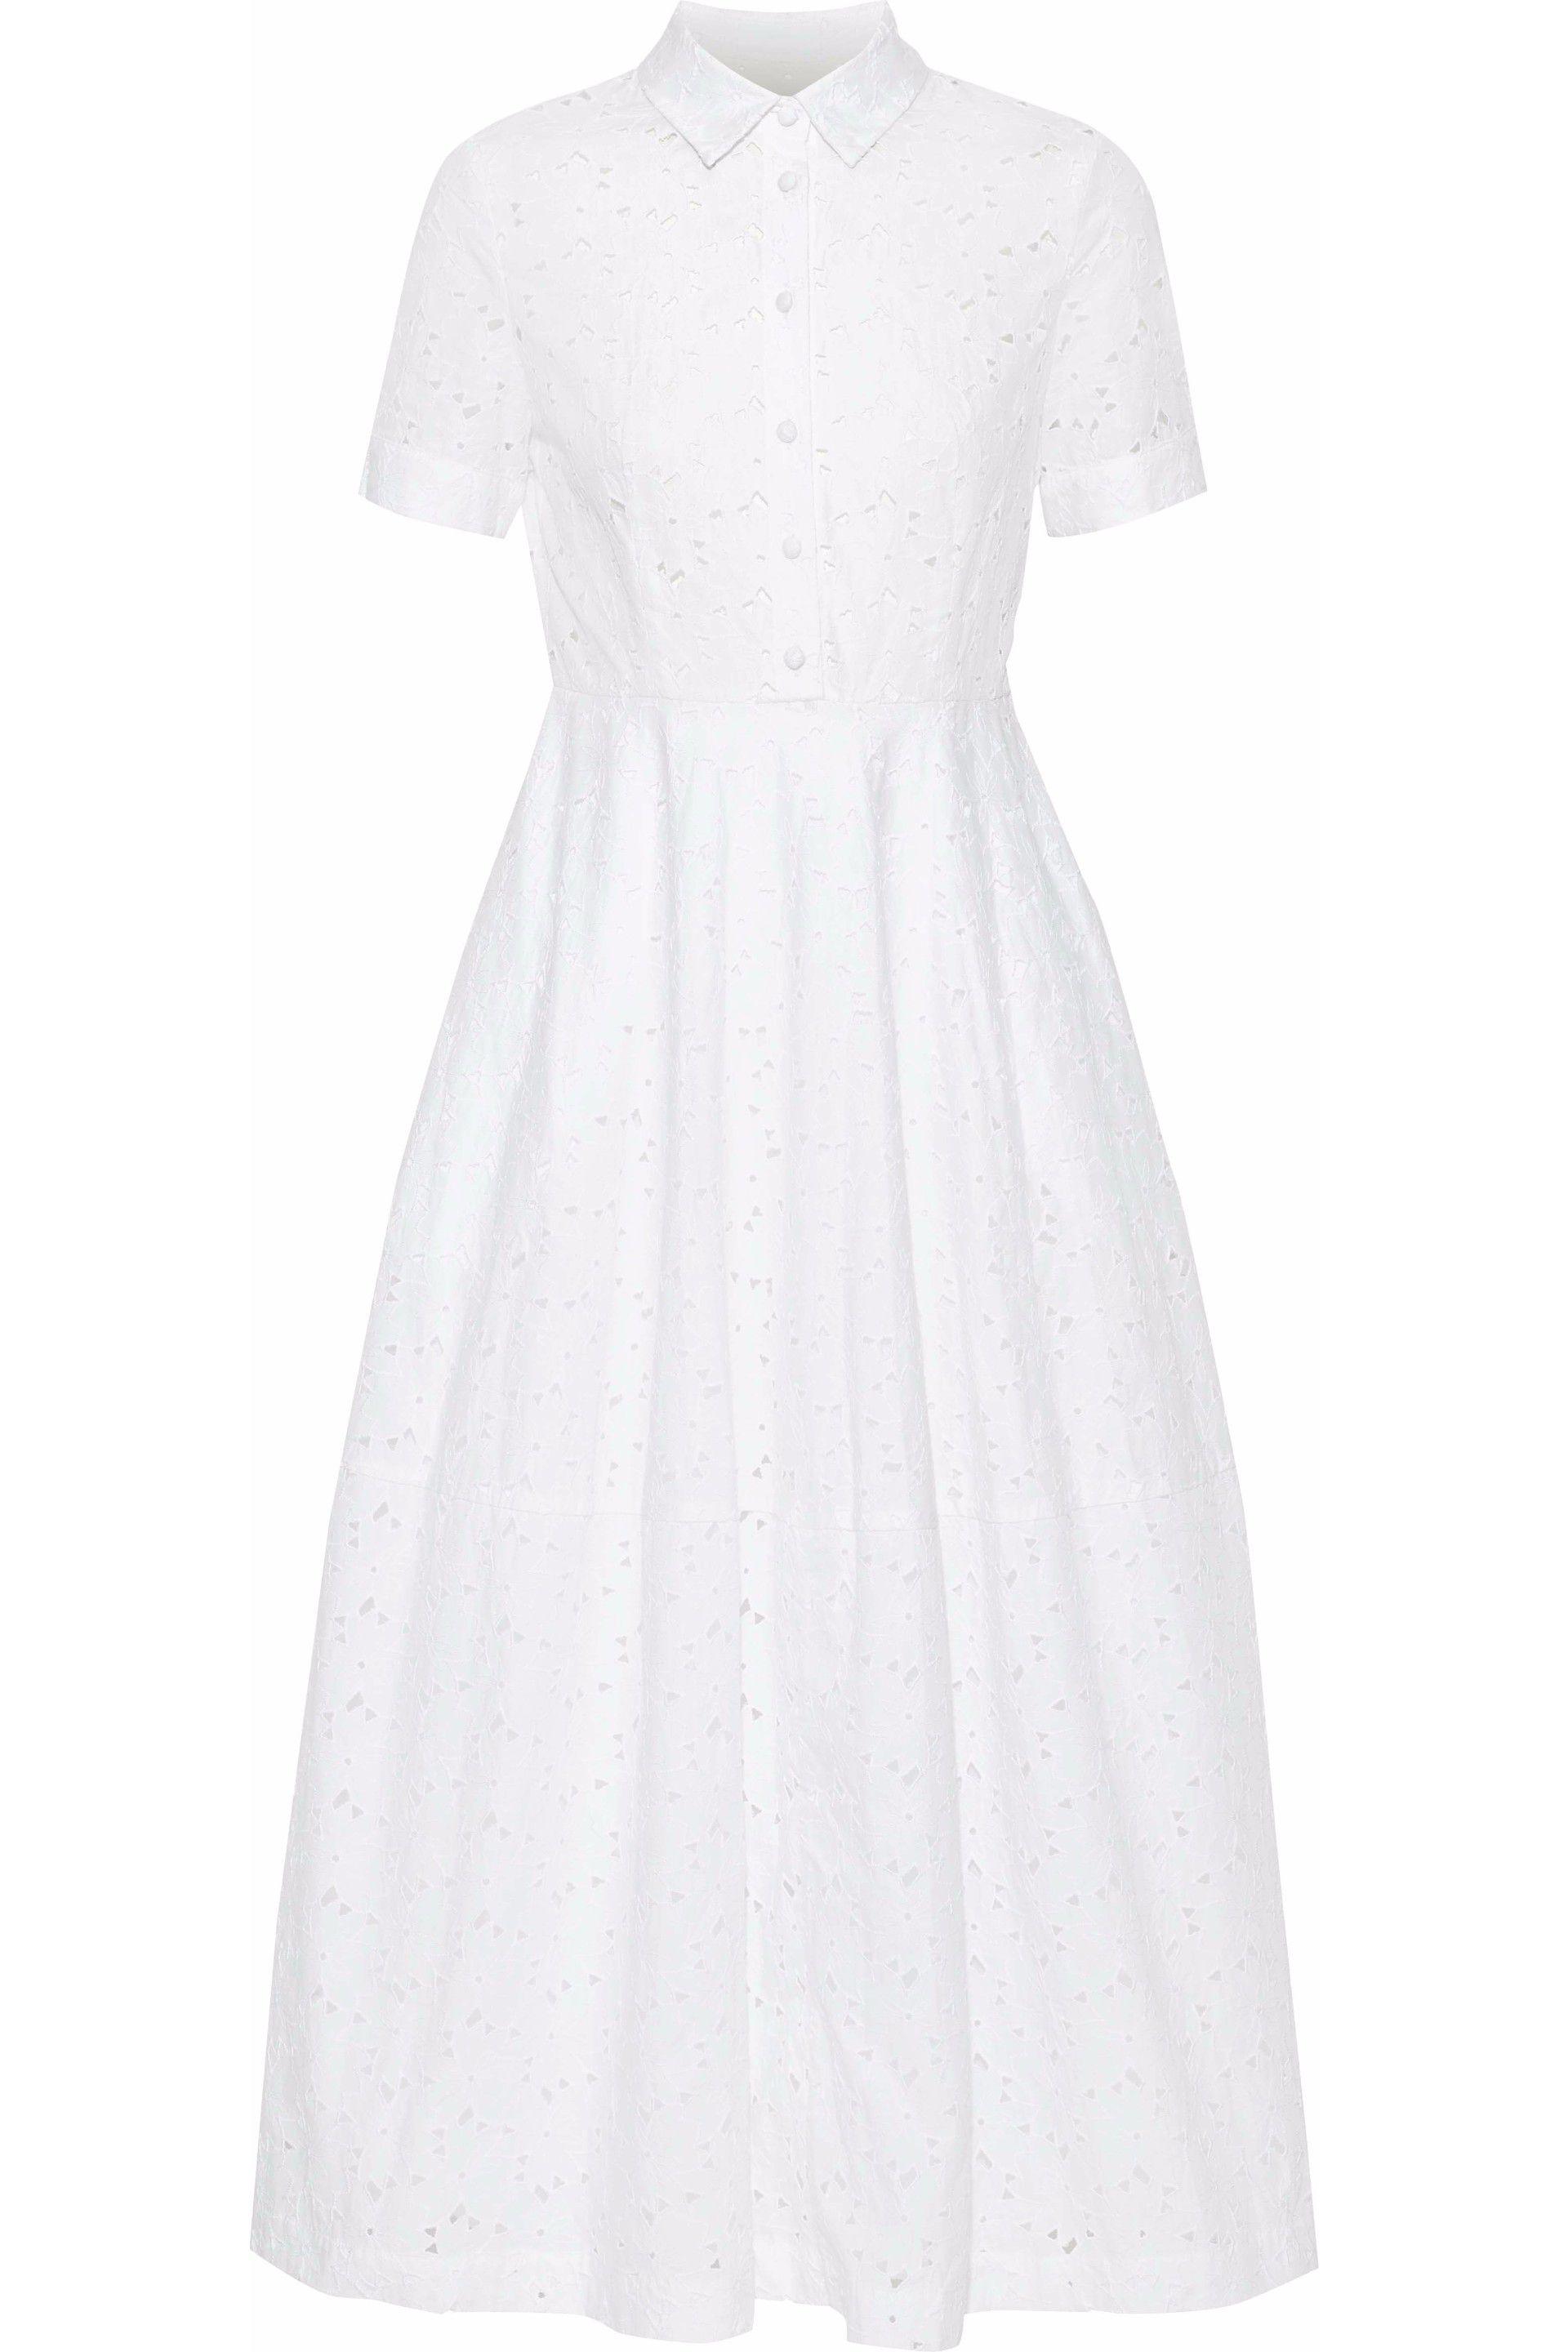 Co. Woman Broderie Anglaise Tton-poplin Midi Shirt Dress White in White ...